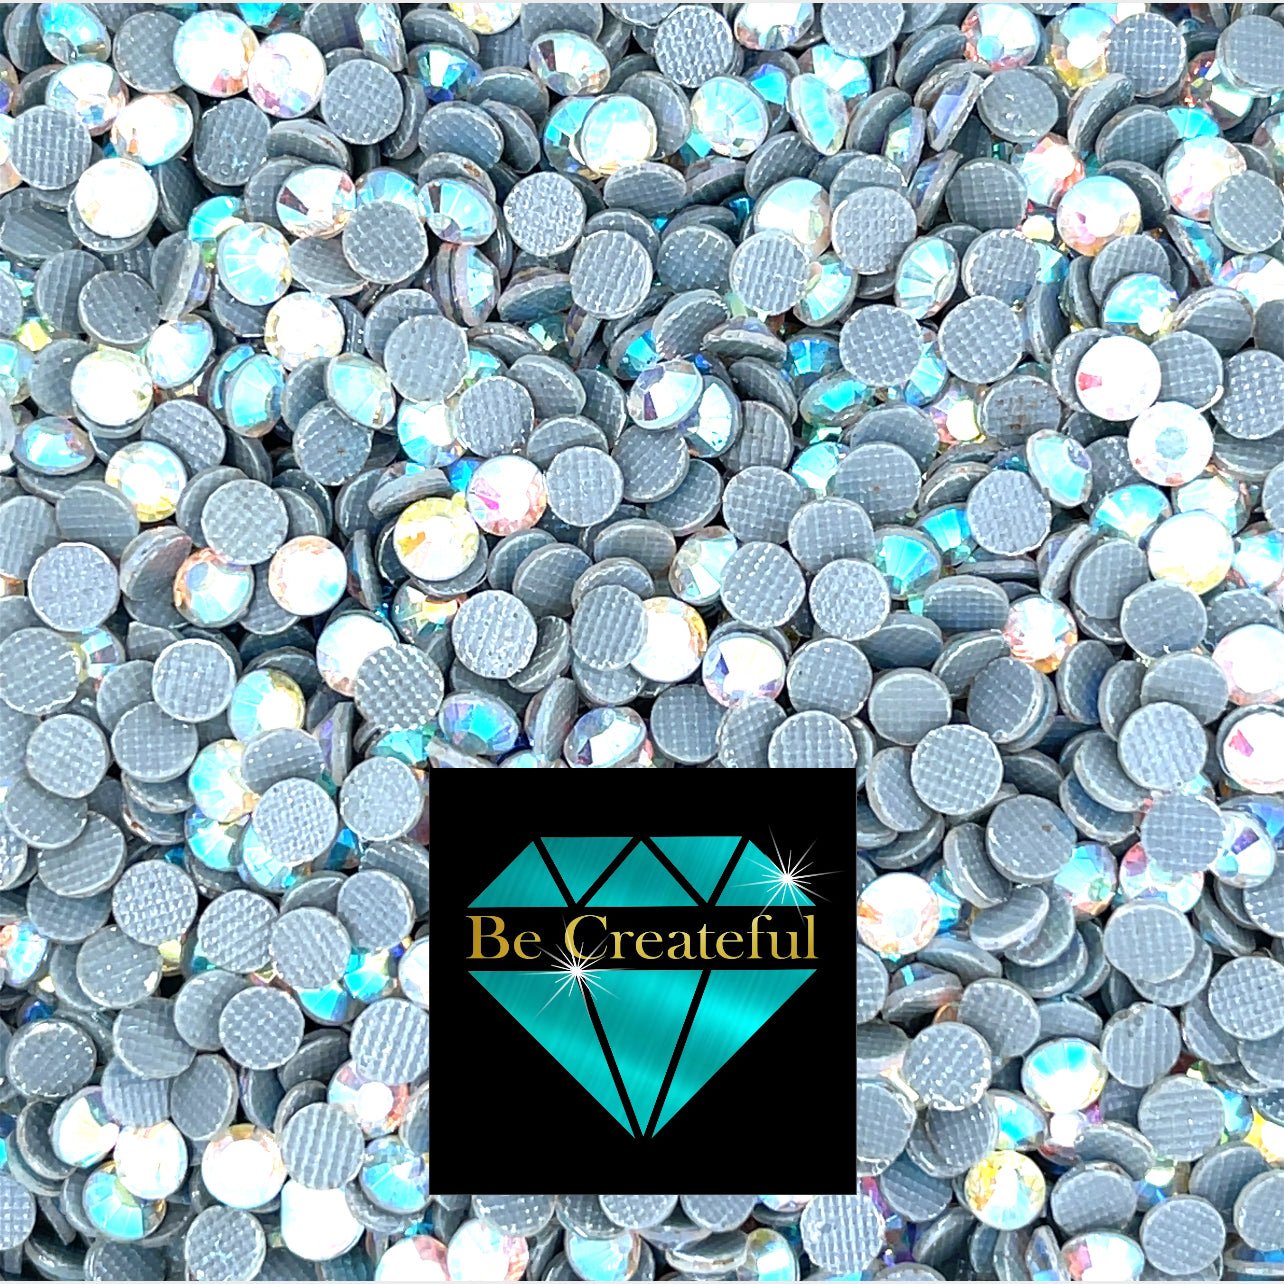 Korean Crystal AB Hotfix Rhinestones - Be Createful, Beautiful Rhinestones at wholesale prices.